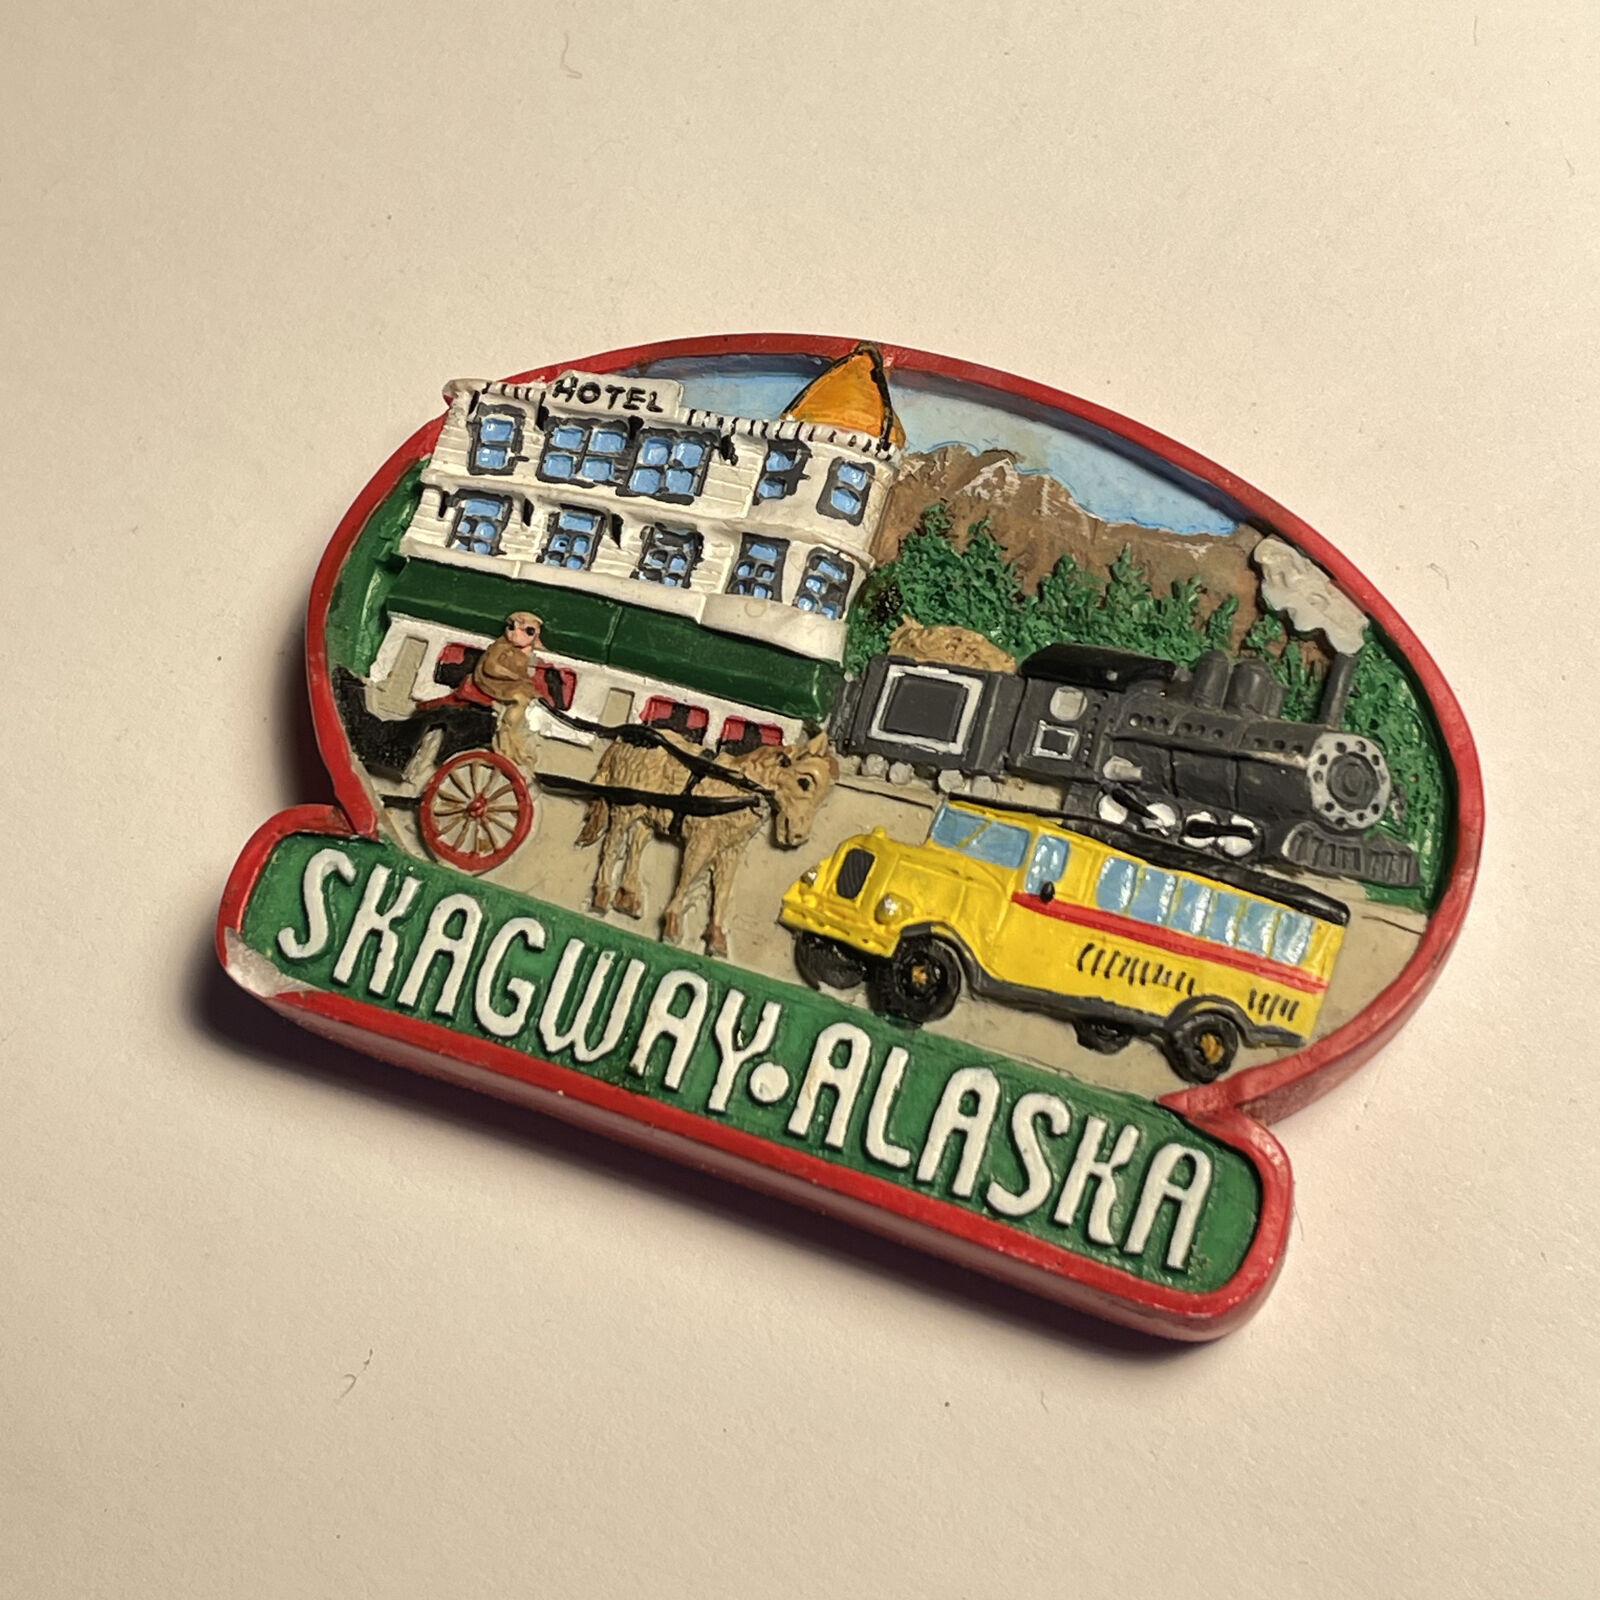 SKAGWAY, ALASKA - Souvenir Refrigerator Fridge Magnet